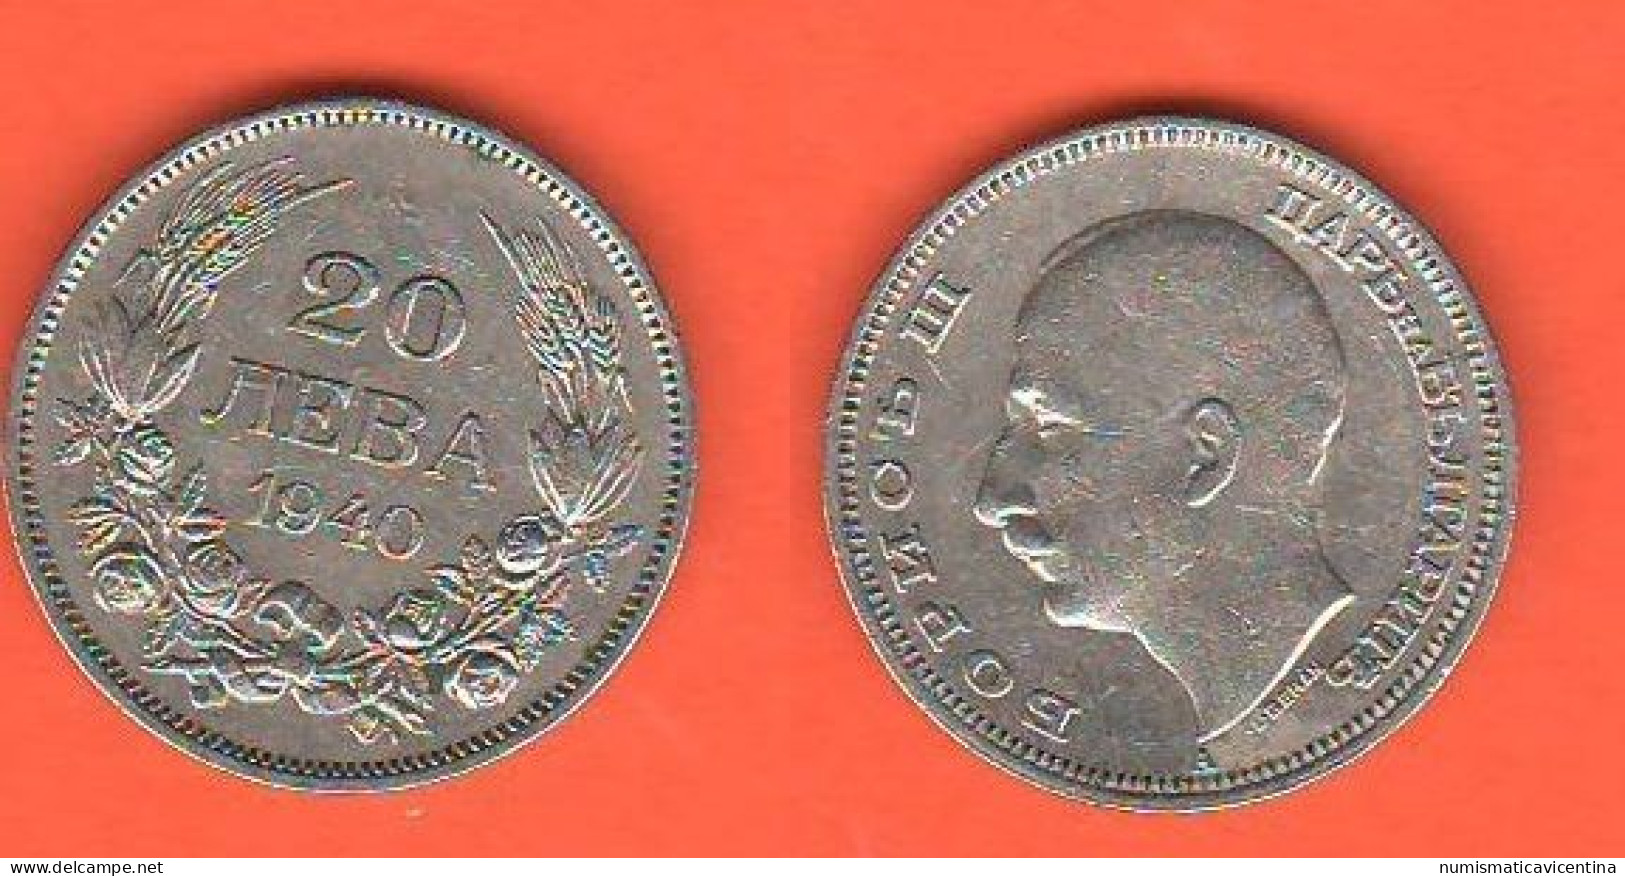 Bulgarie 20 Leva 1940 Bulgaria България 20 лева Nickel Typological Coin King Boris III° - Bulgarie